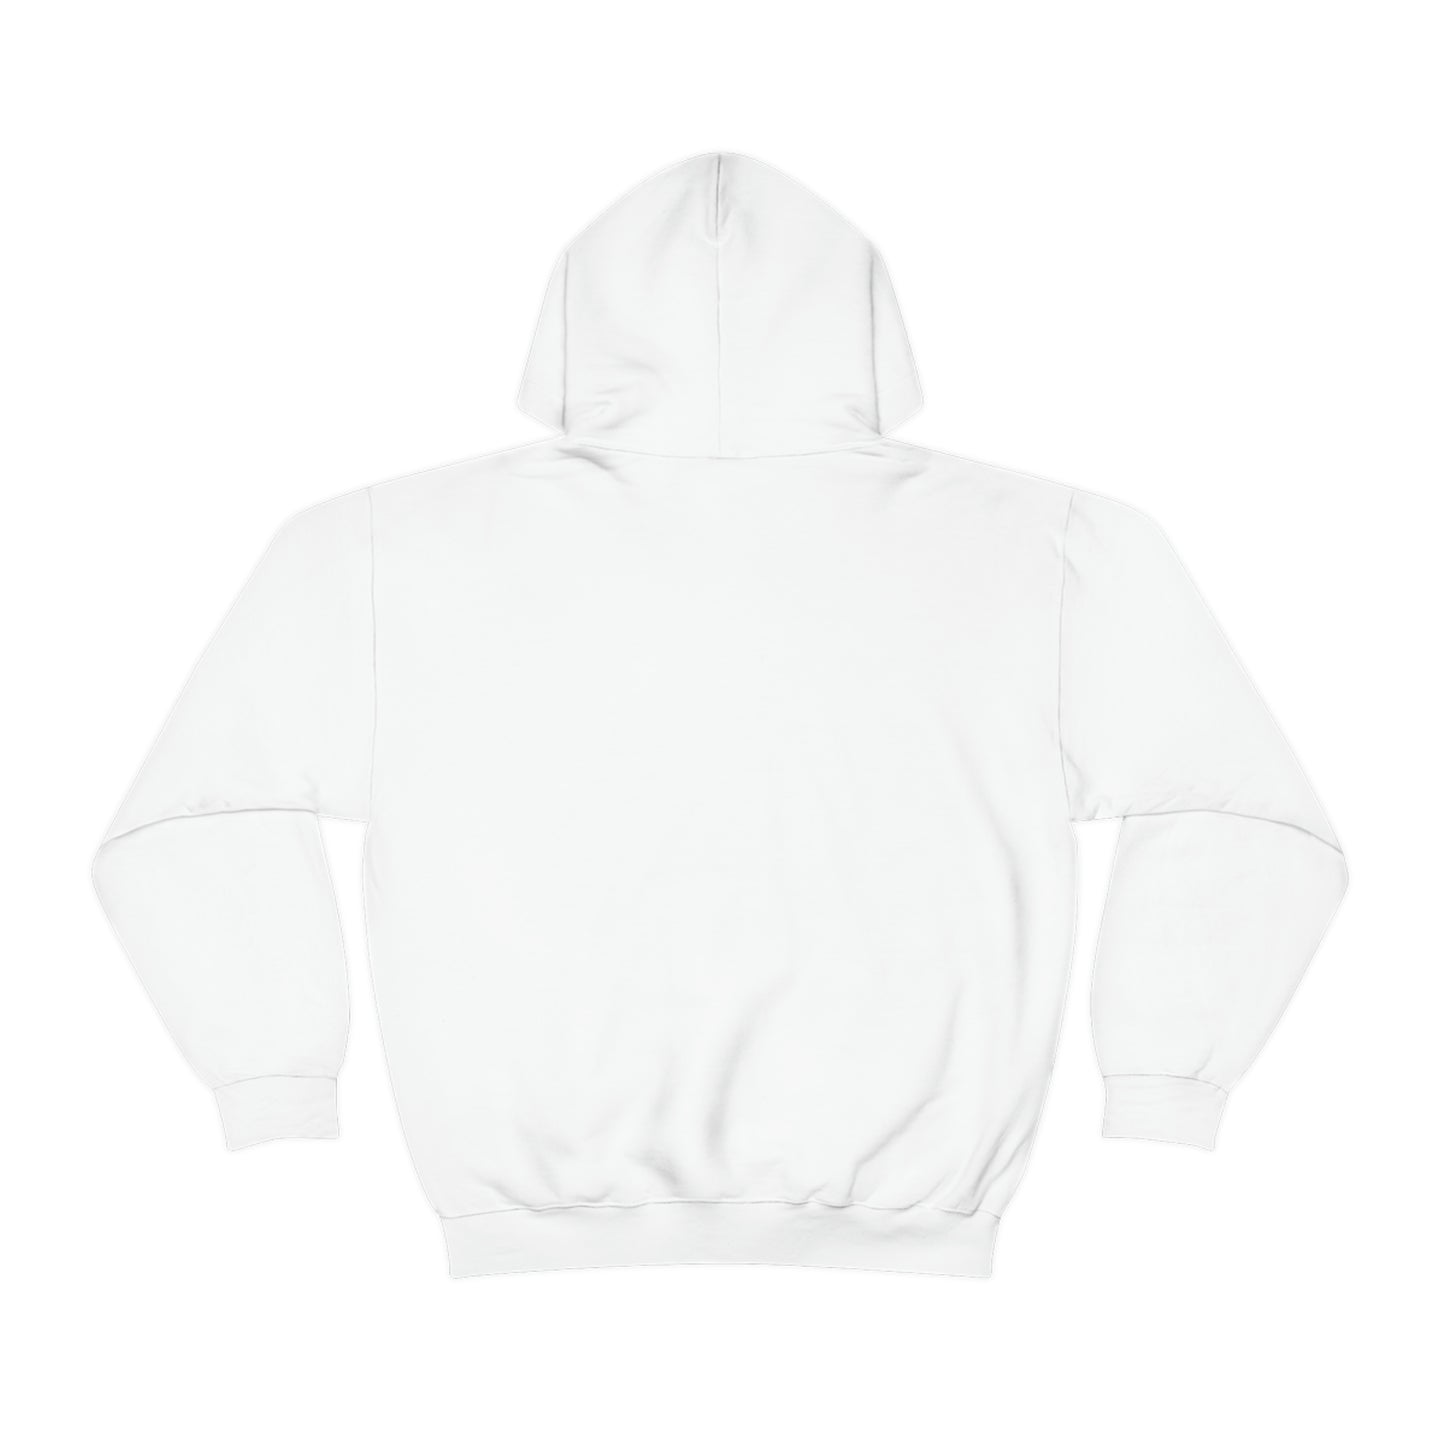 Unisex "Cancel ❌ Kouture" Hooded Sweatshirt